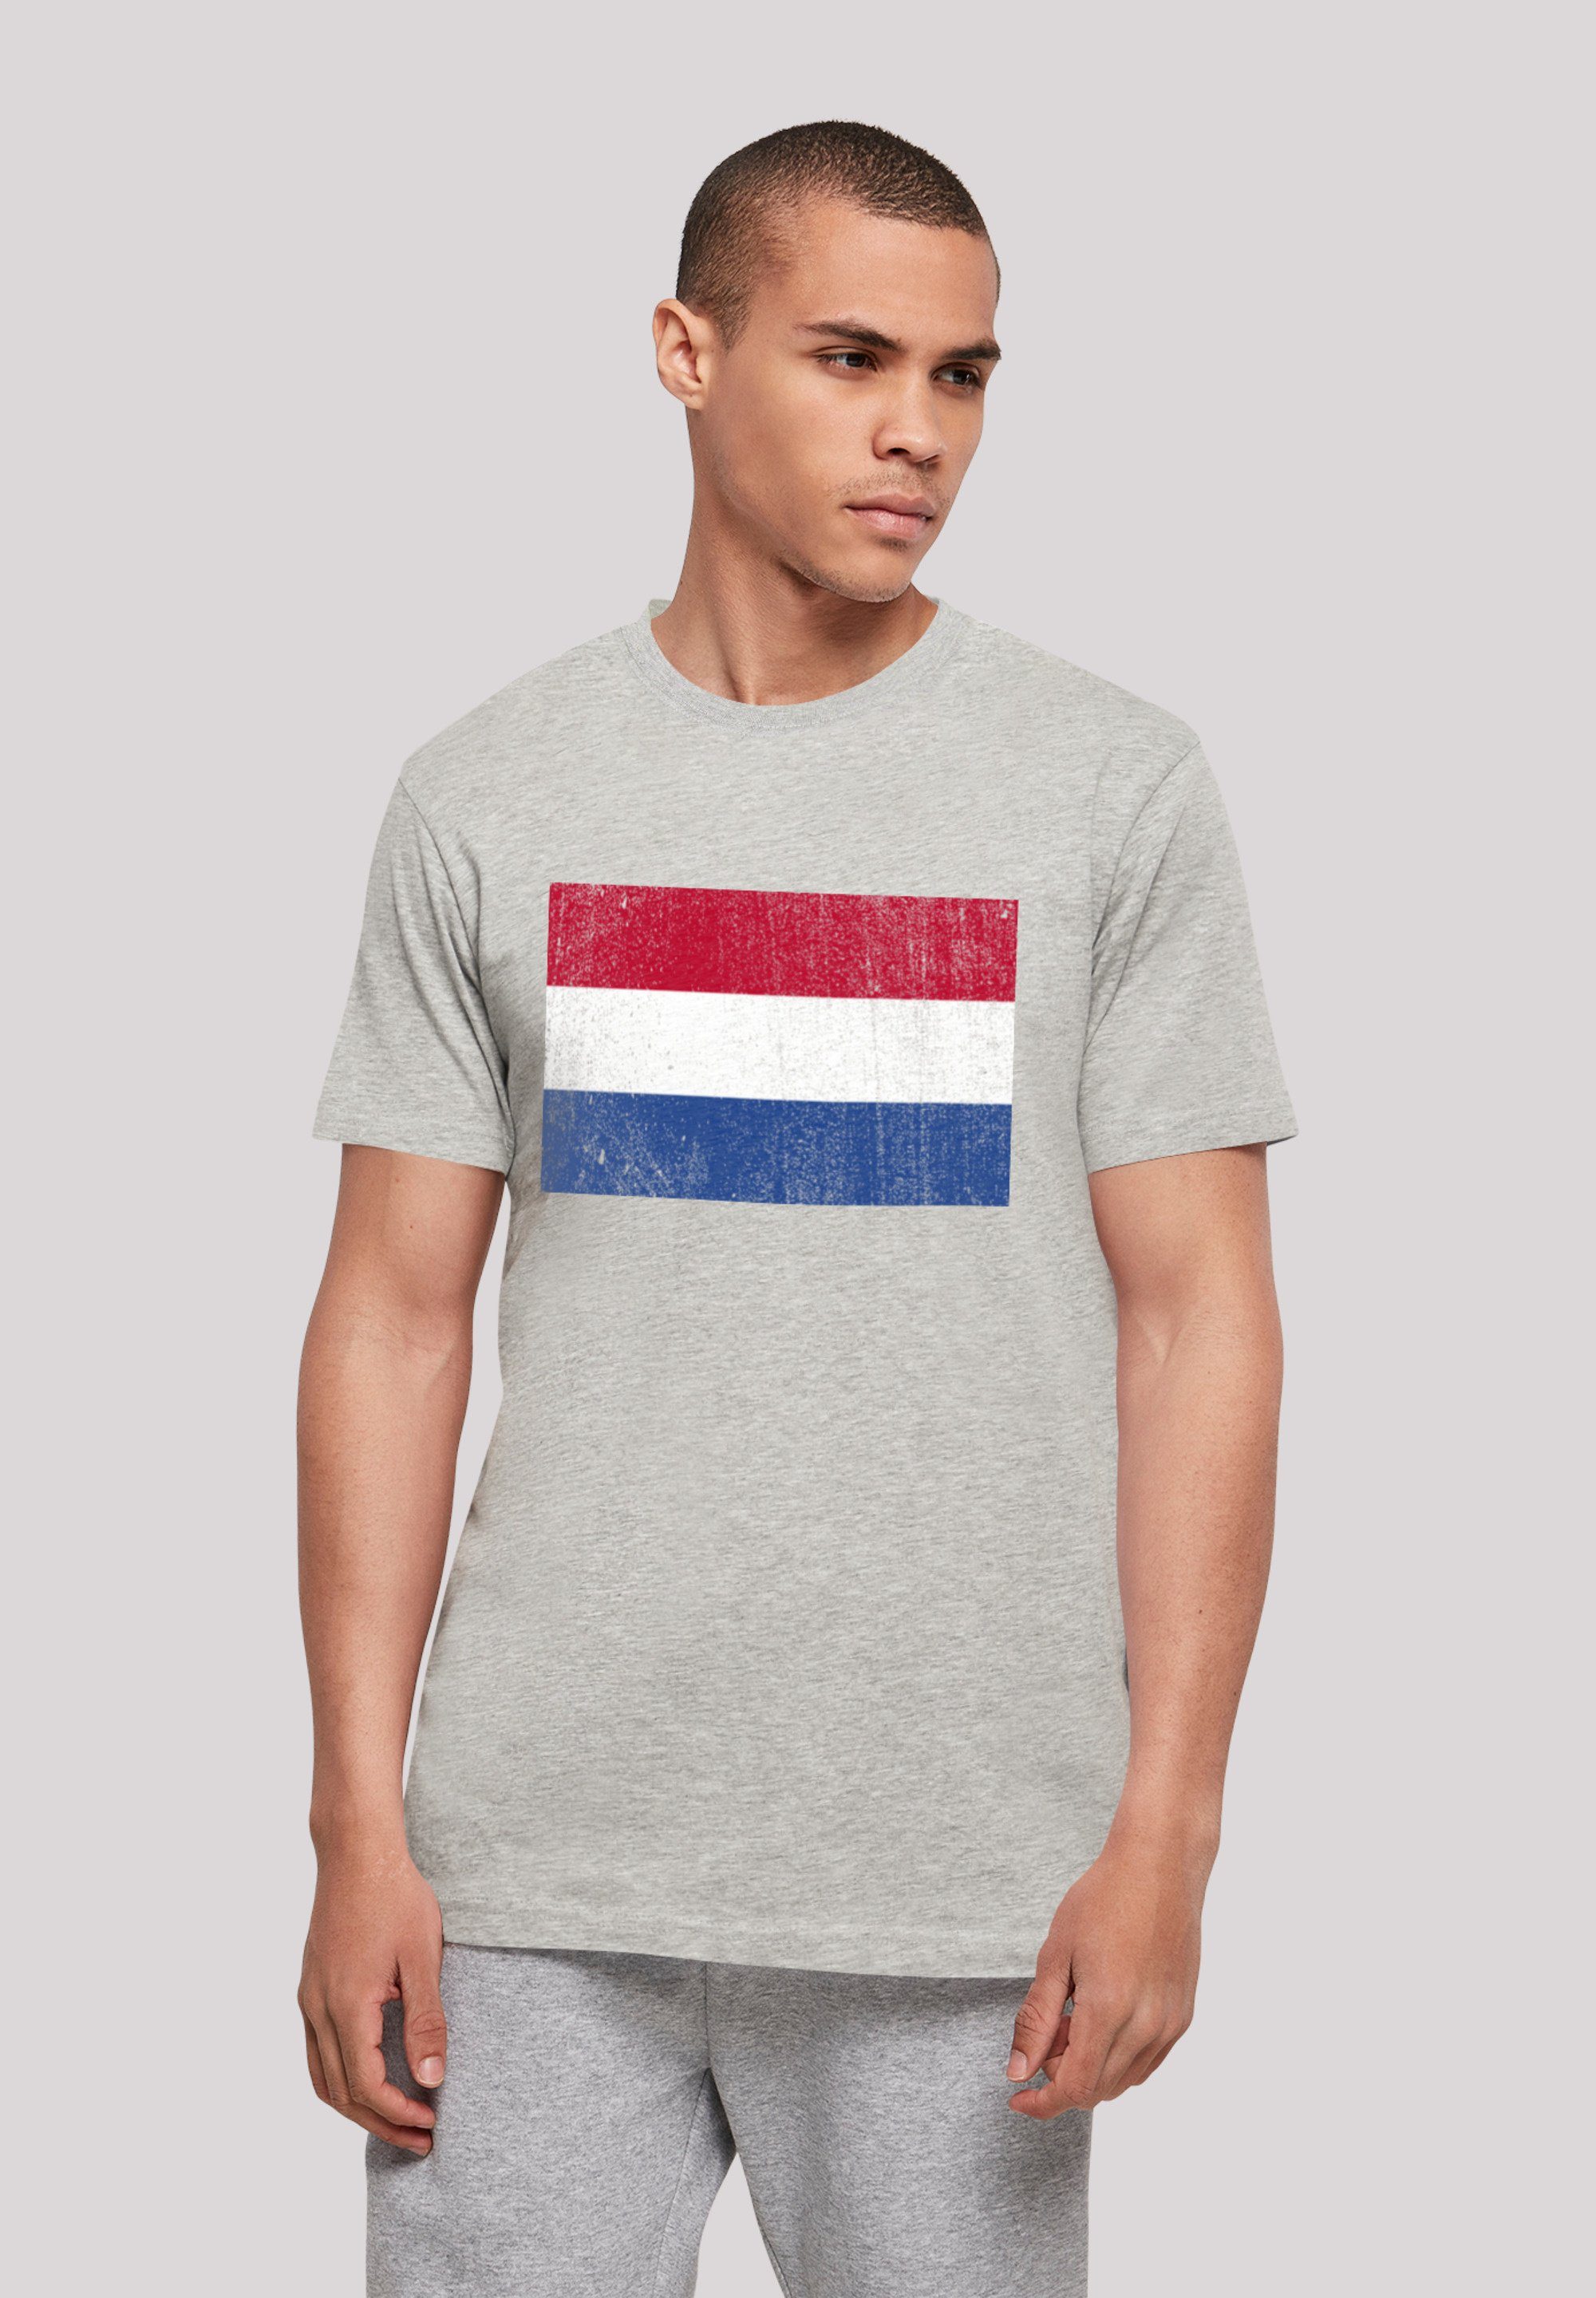 F4NT4STIC T-Shirt Niederlande Holland Flagge distressed Print heather grey